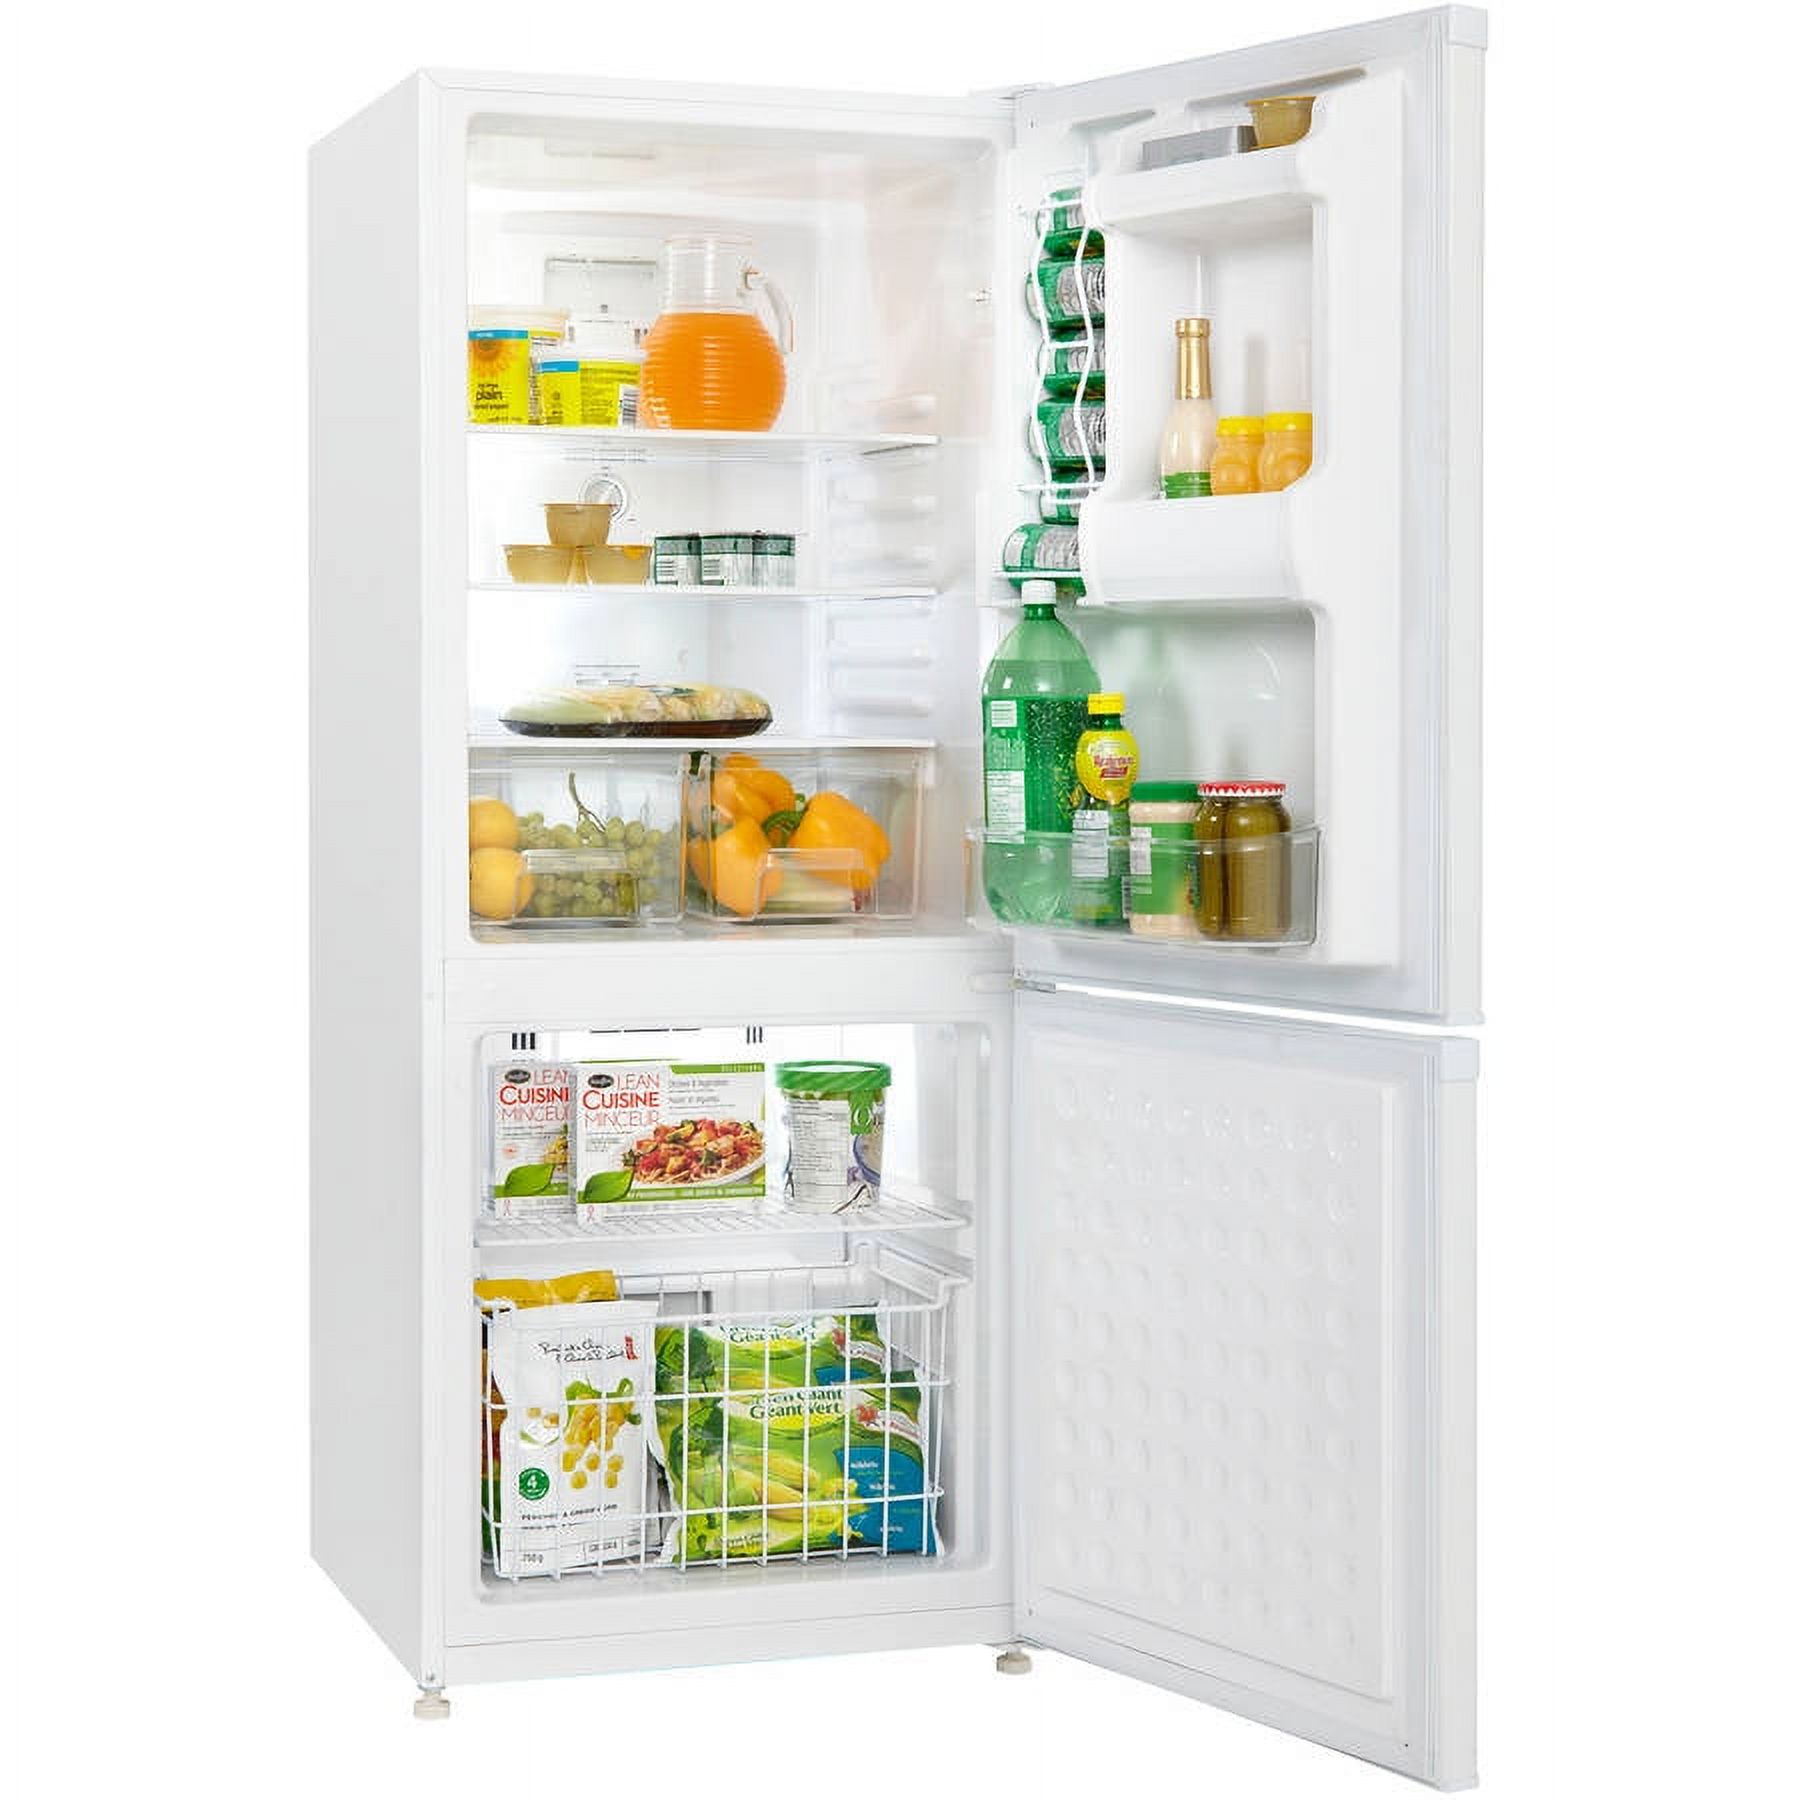 Danby 9.2 Cu Ft Bottom Mount Refrigerator, White - image 4 of 5